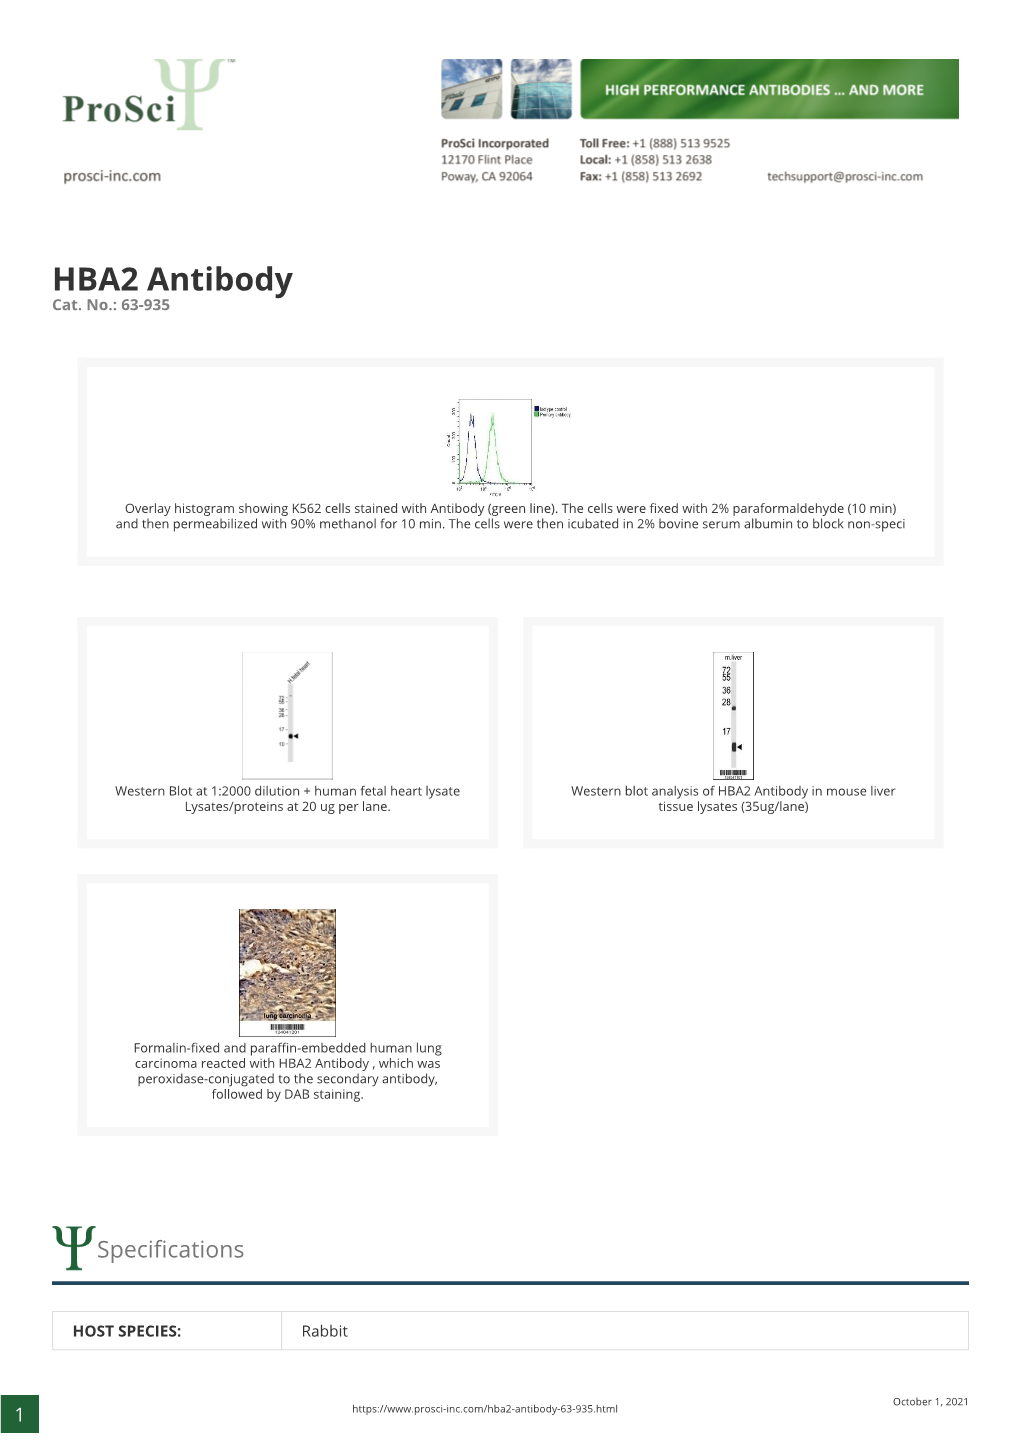 HBA2 Antibody Cat